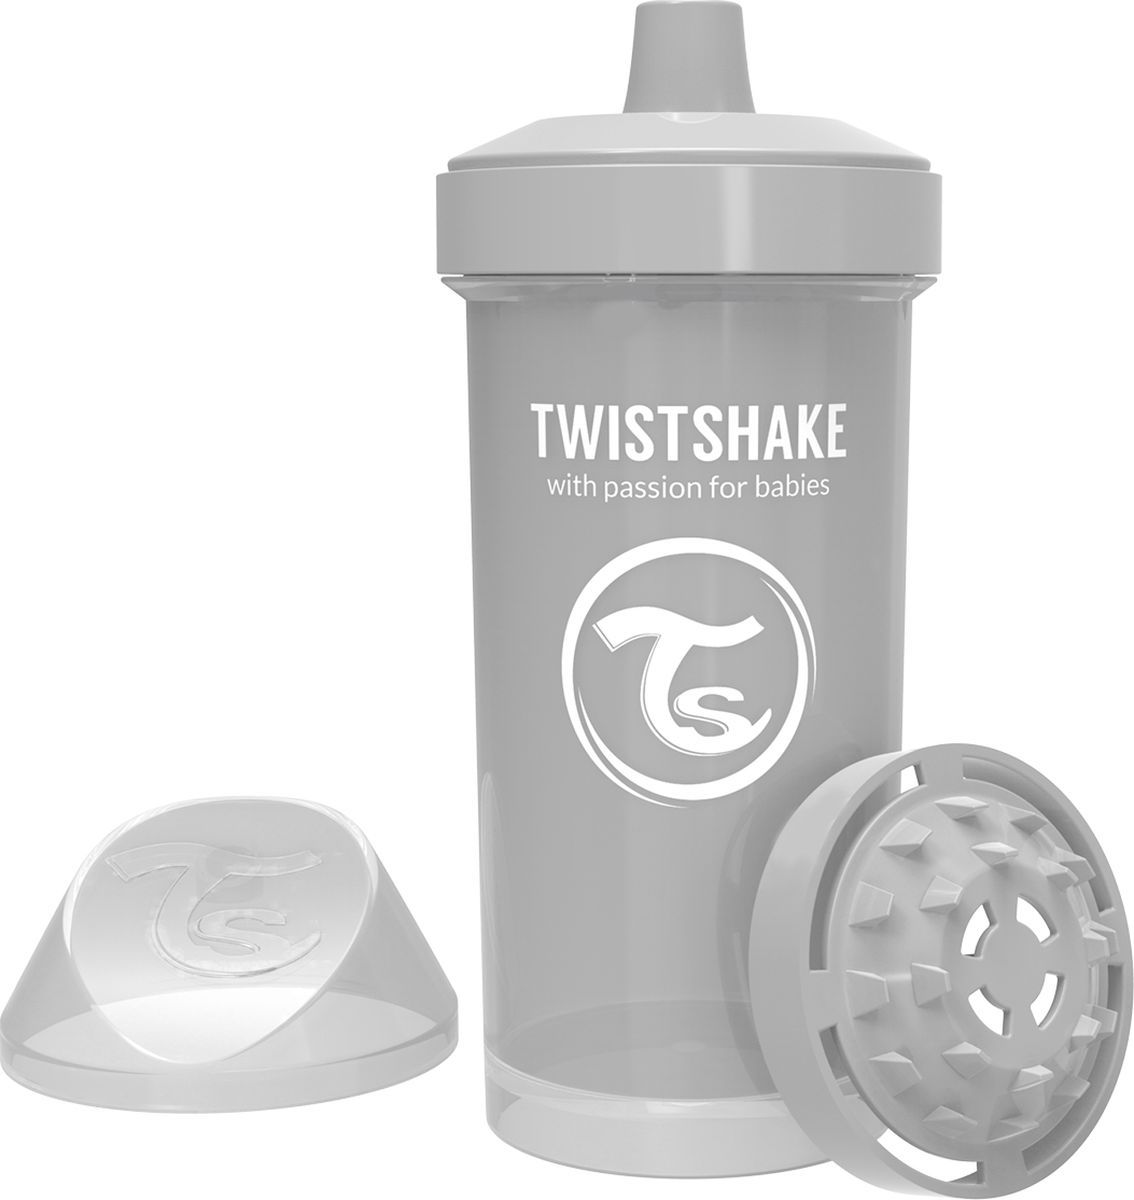  Twistshake Pastel Grey, : , 360 